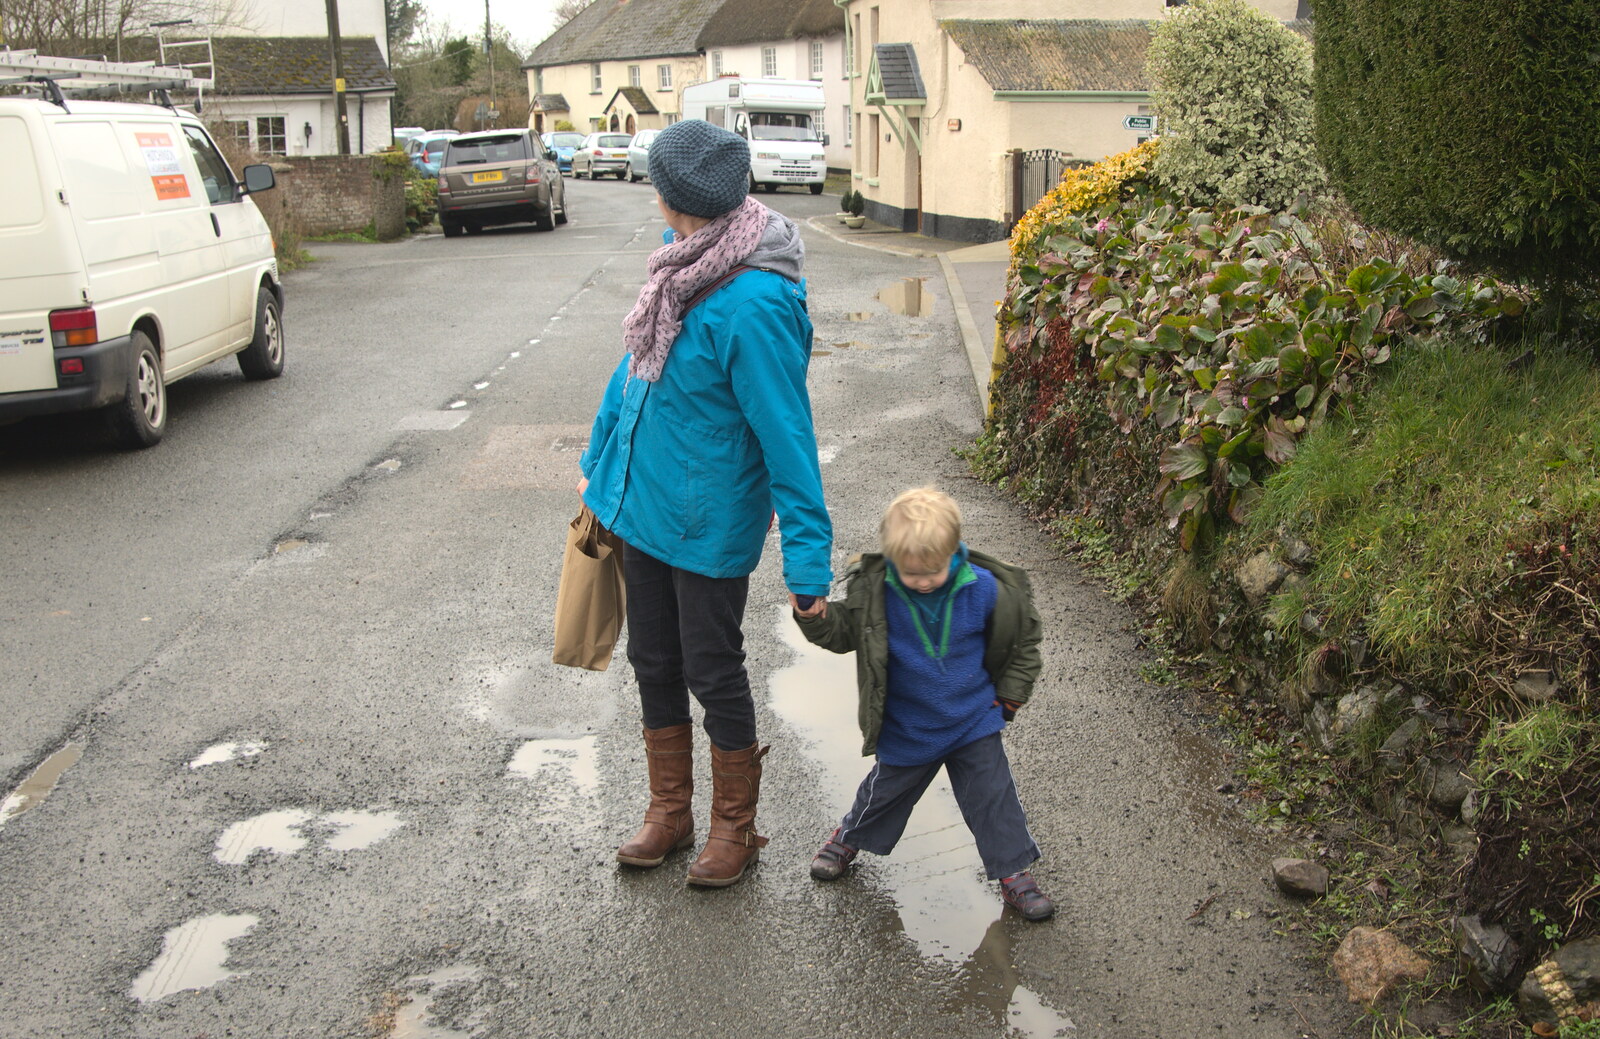 Isobel and Harry in Spreyton from A Trip to Grandma J's, Spreyton, Devon - 18th February 2015